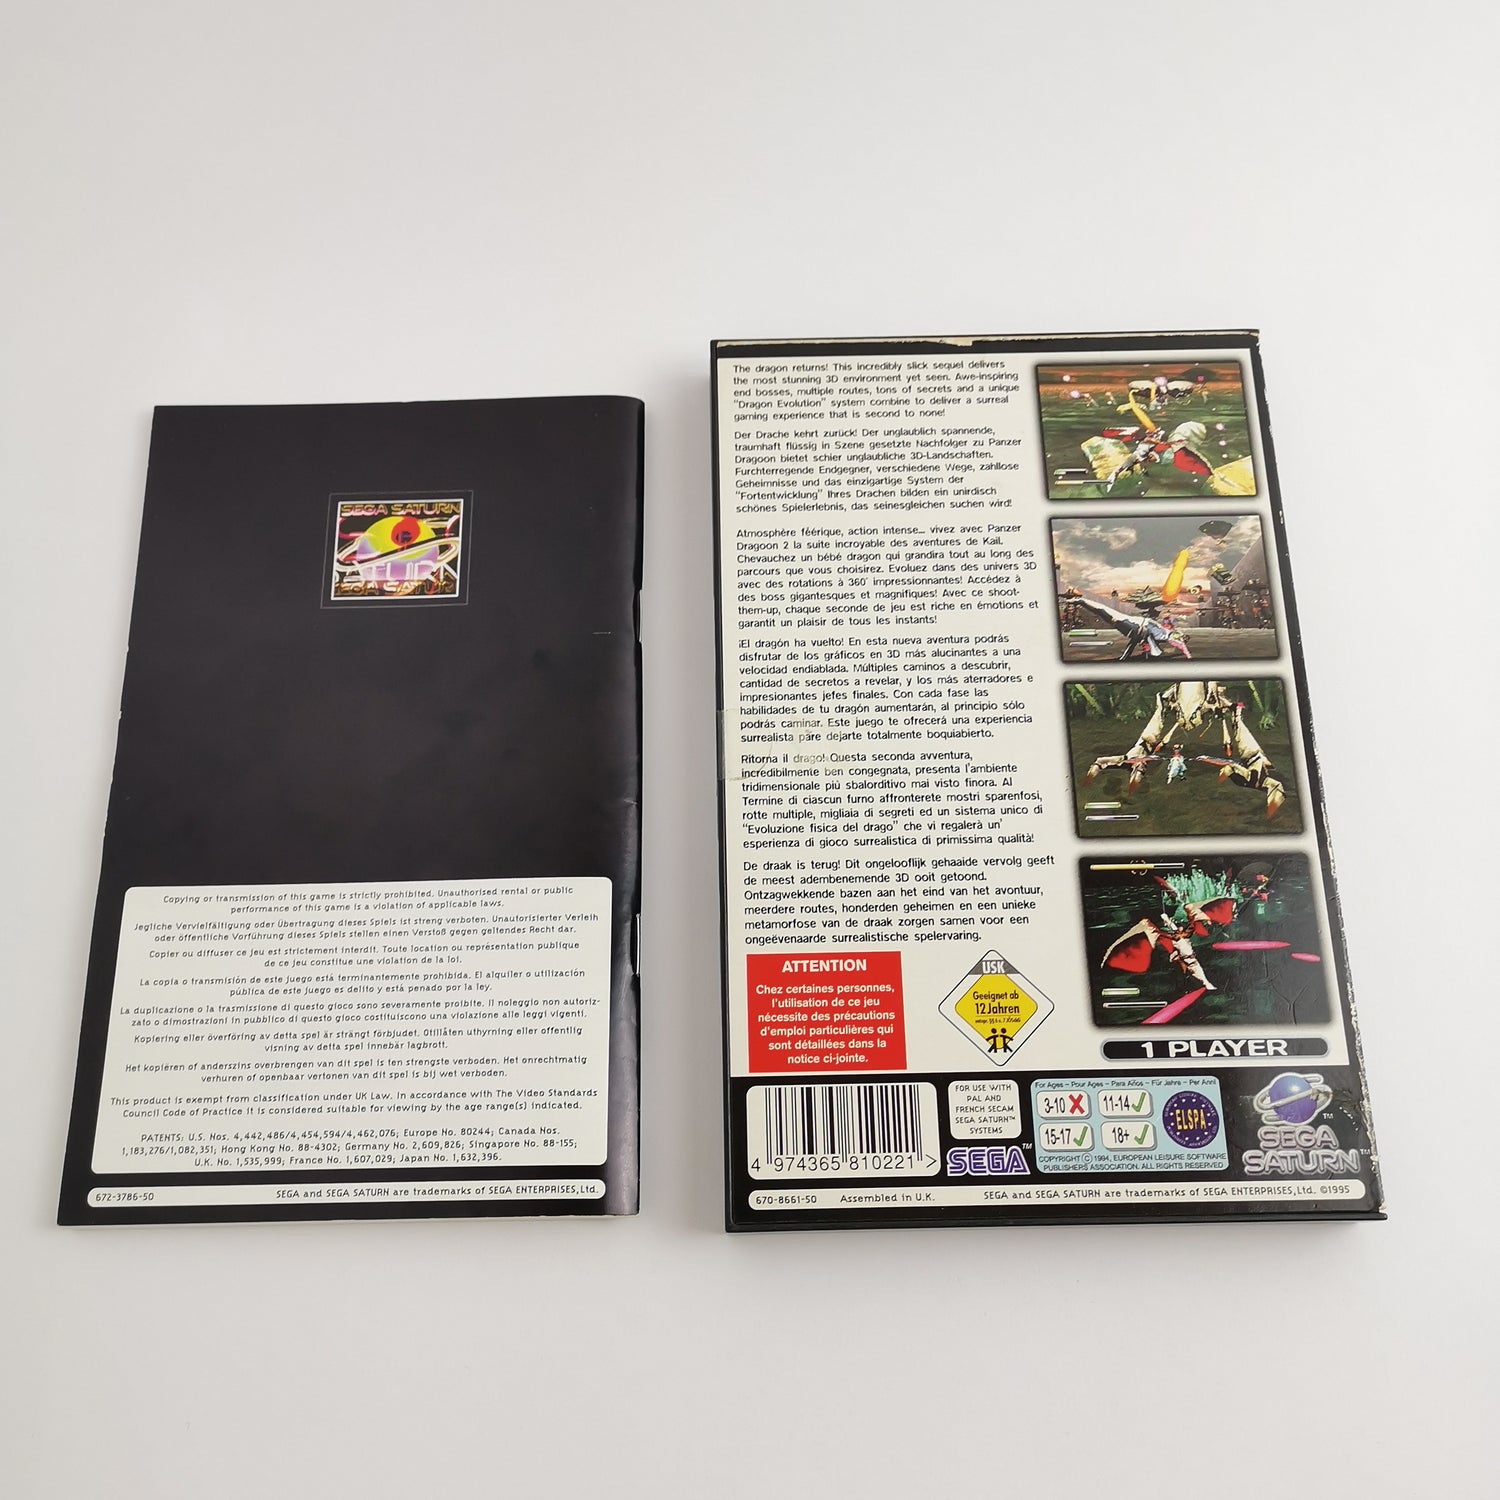 Sega Saturn game: Panzer Dragoon Zwei II 2 - original packaging & instructions | PAL version [1]